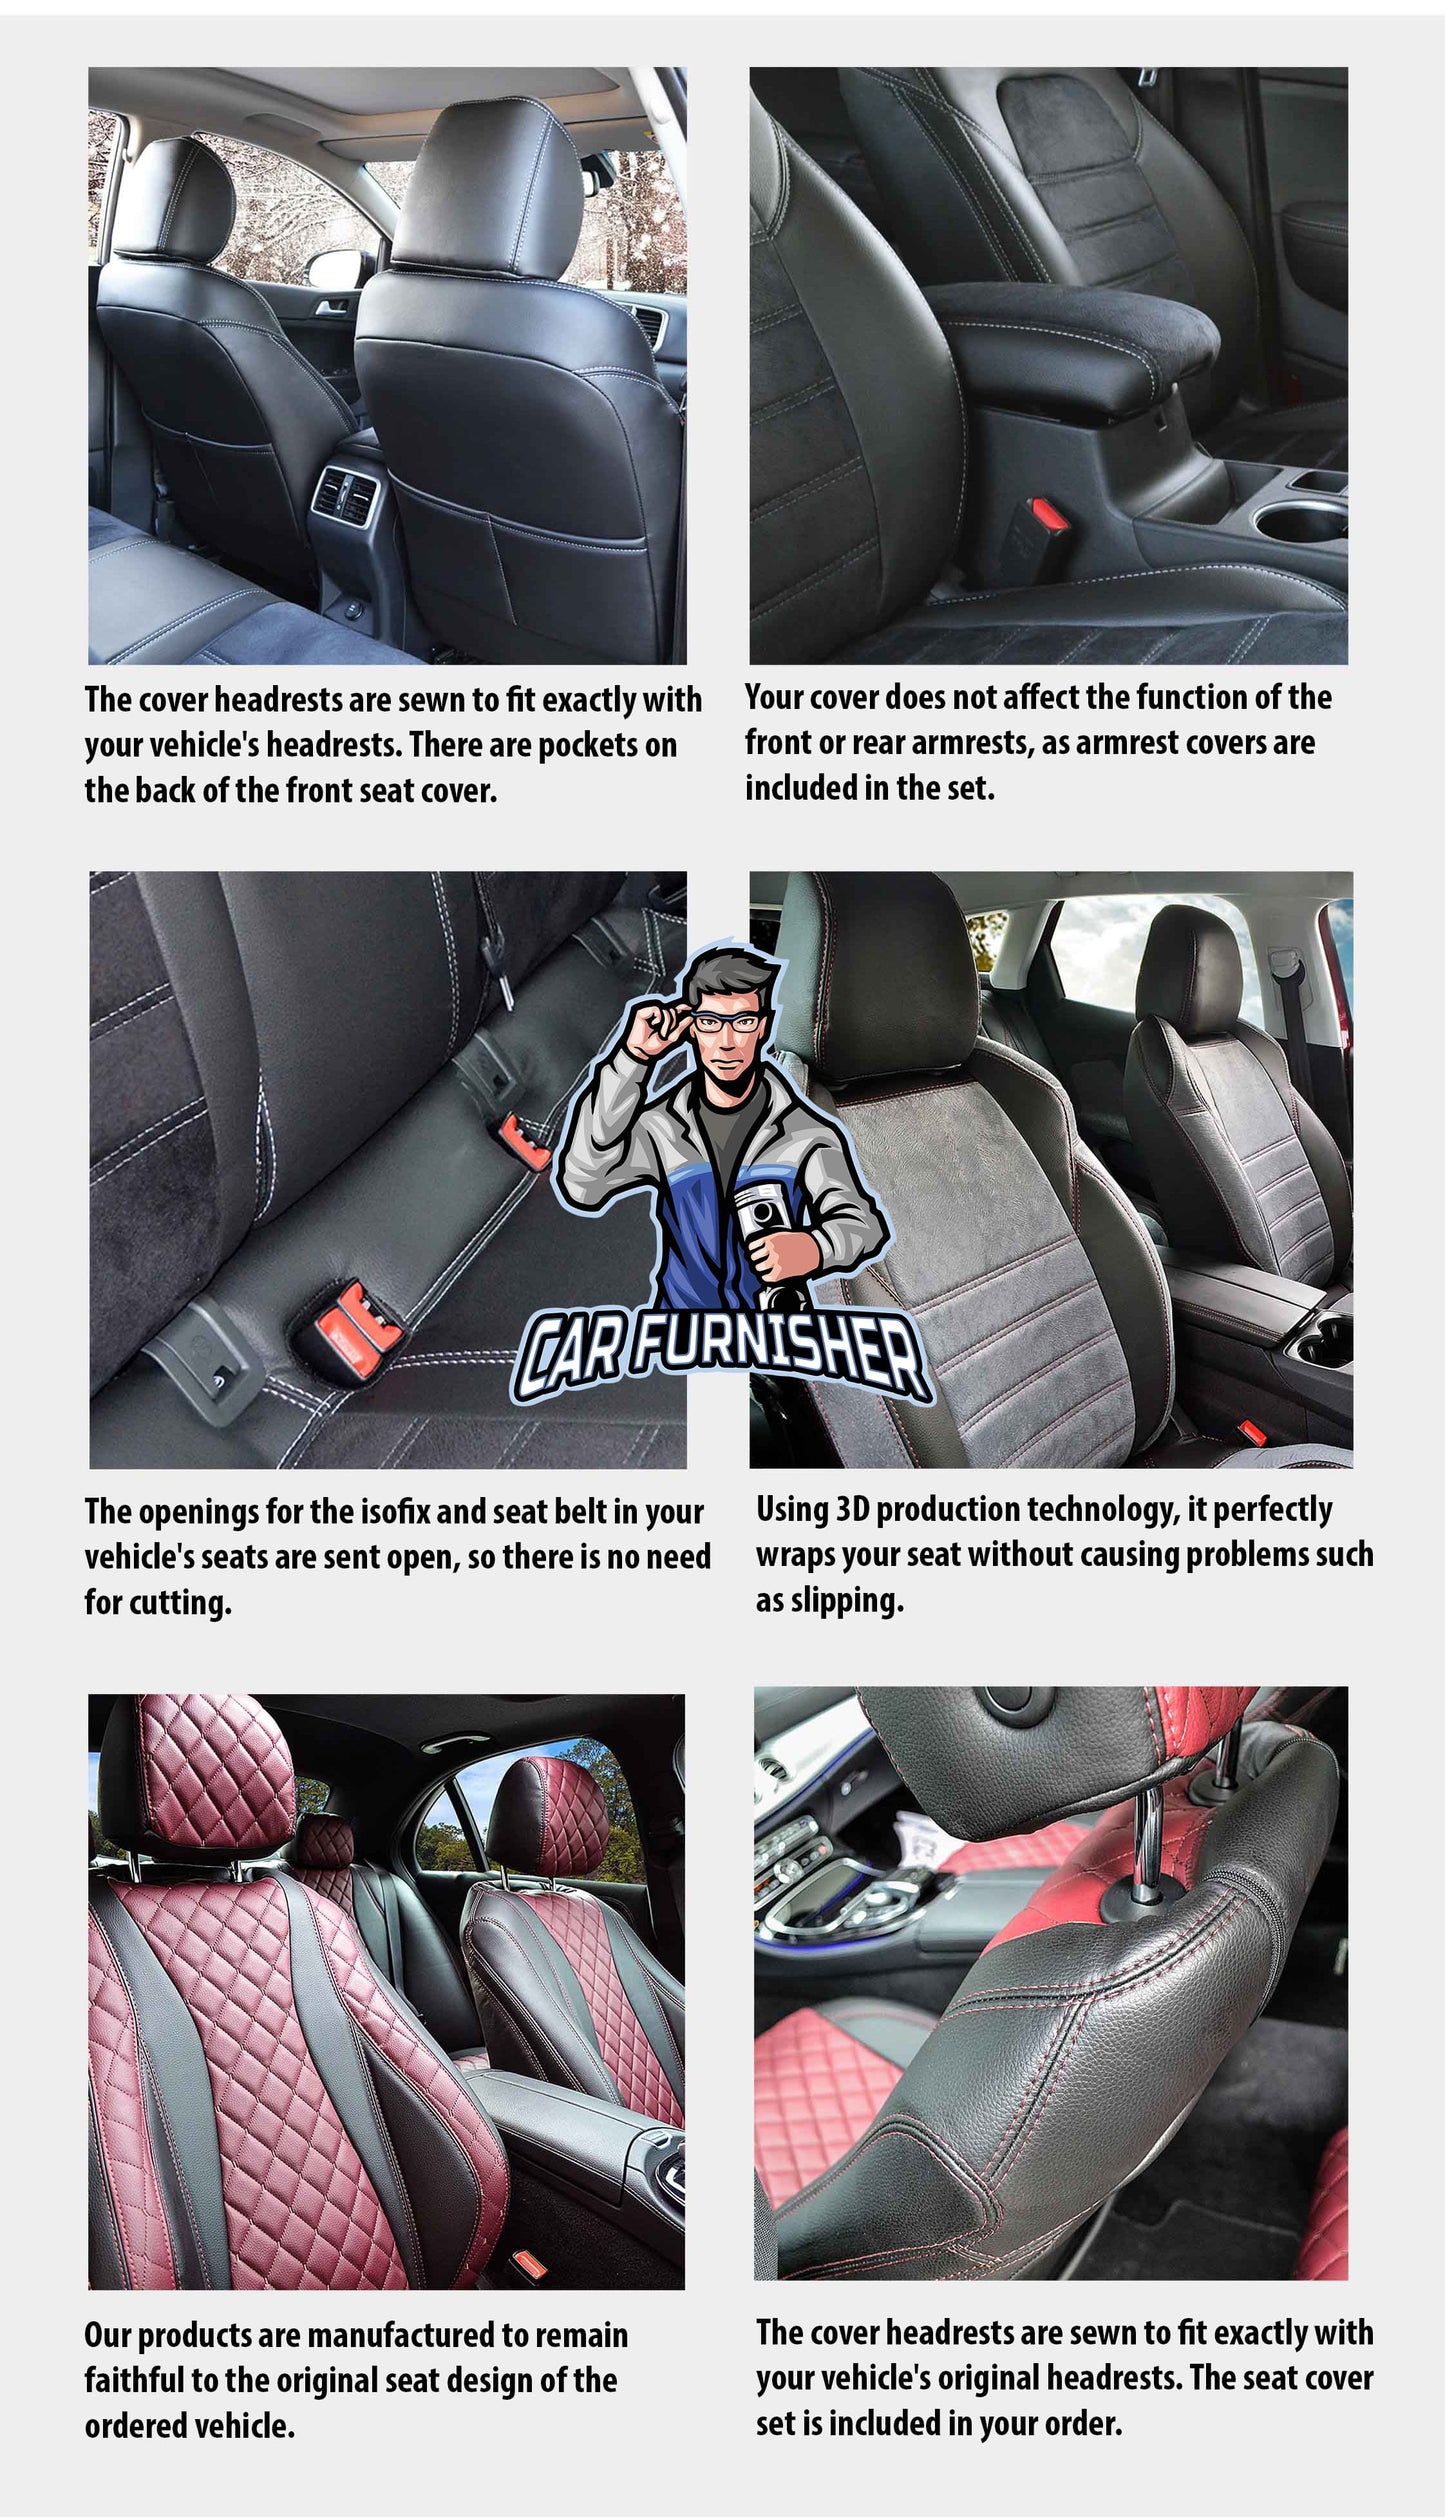 Hyundai i10 Seat Covers Milano Suede Design Black Leather & Suede Fabric